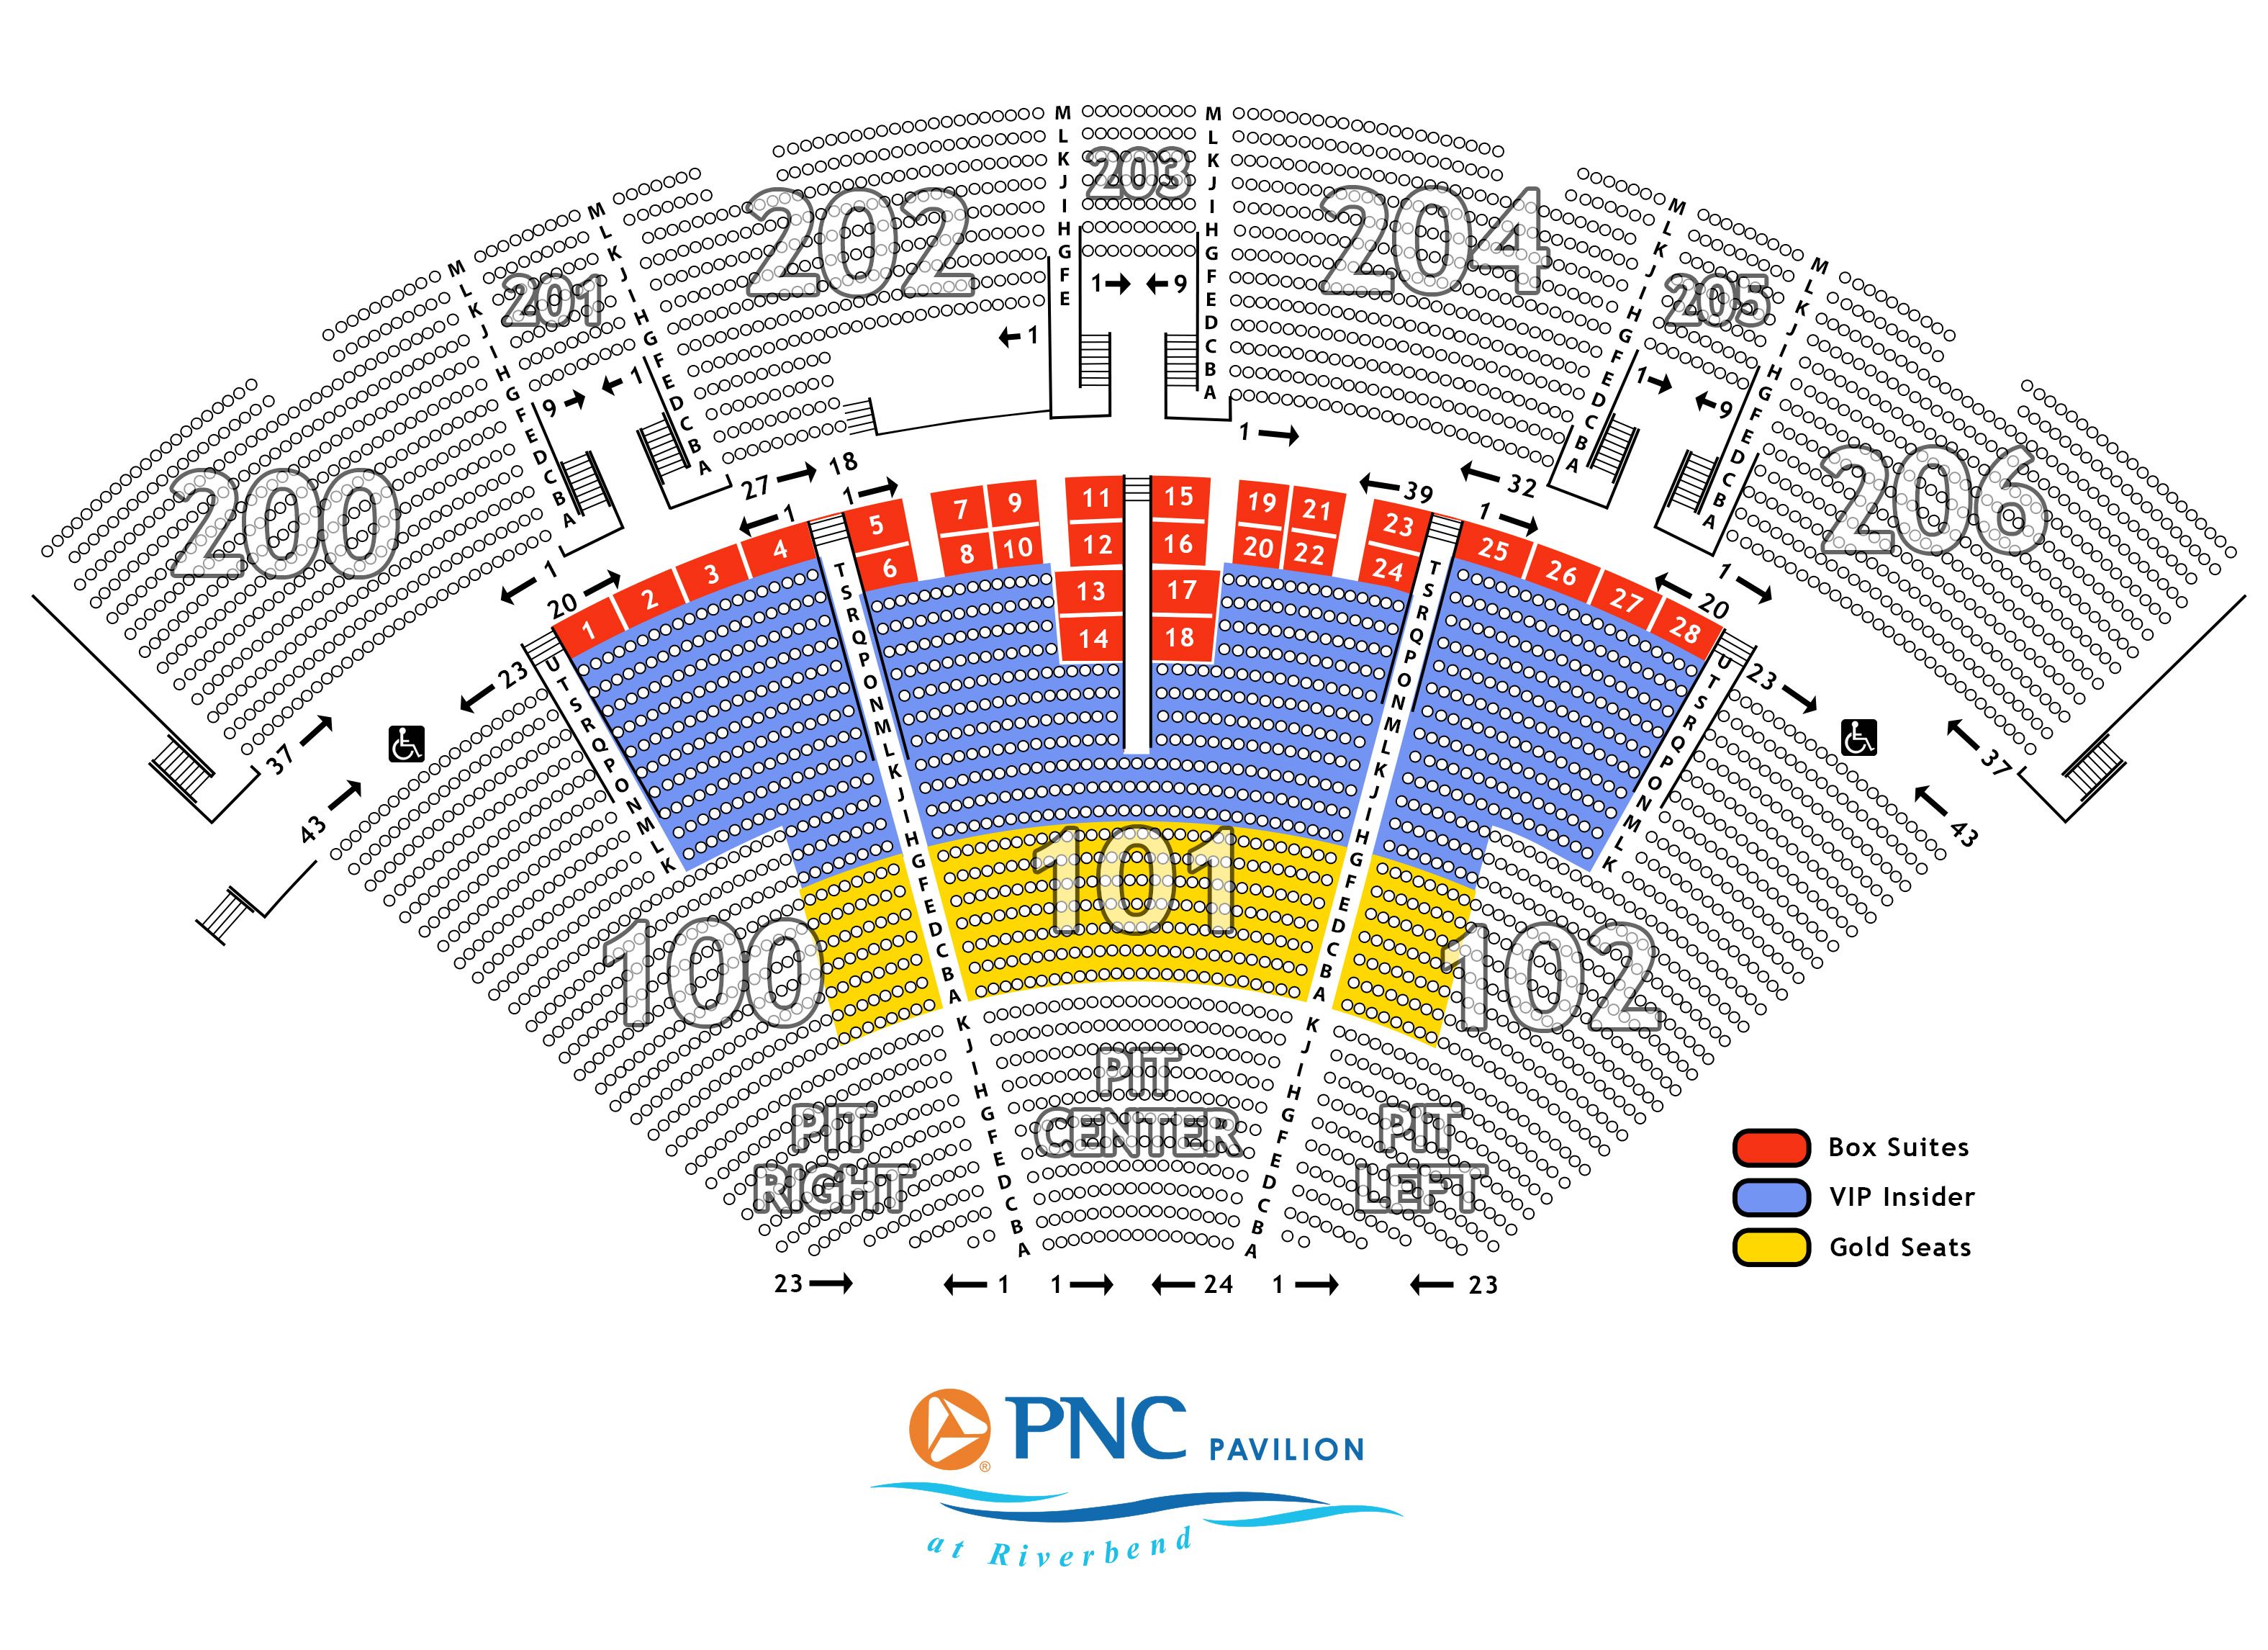 Pnc Pavilion Cincinnati Seating Chart